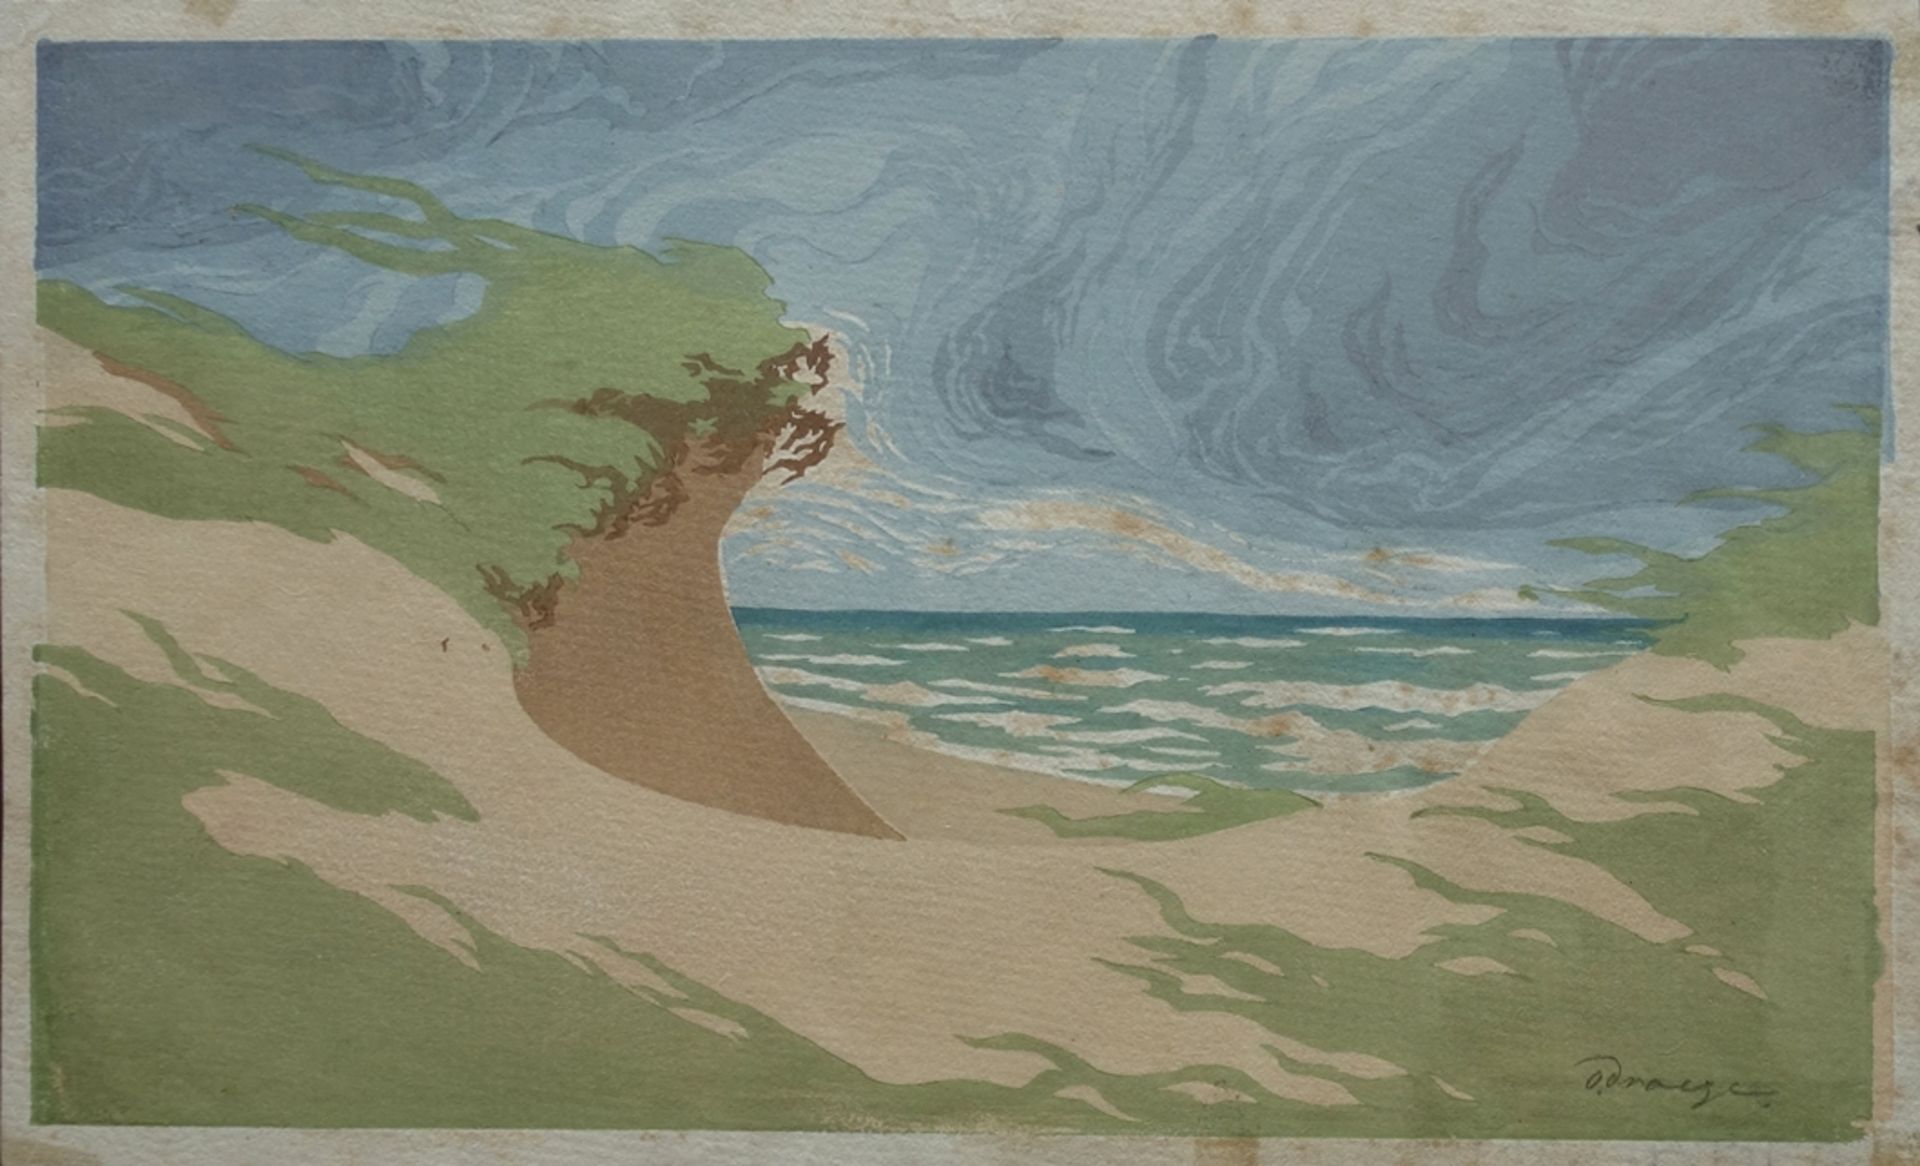 Oscar Droege (1898, Hamburg - 1983, ibid.), "Dune with Sea View", c. 1930, colour woodcut